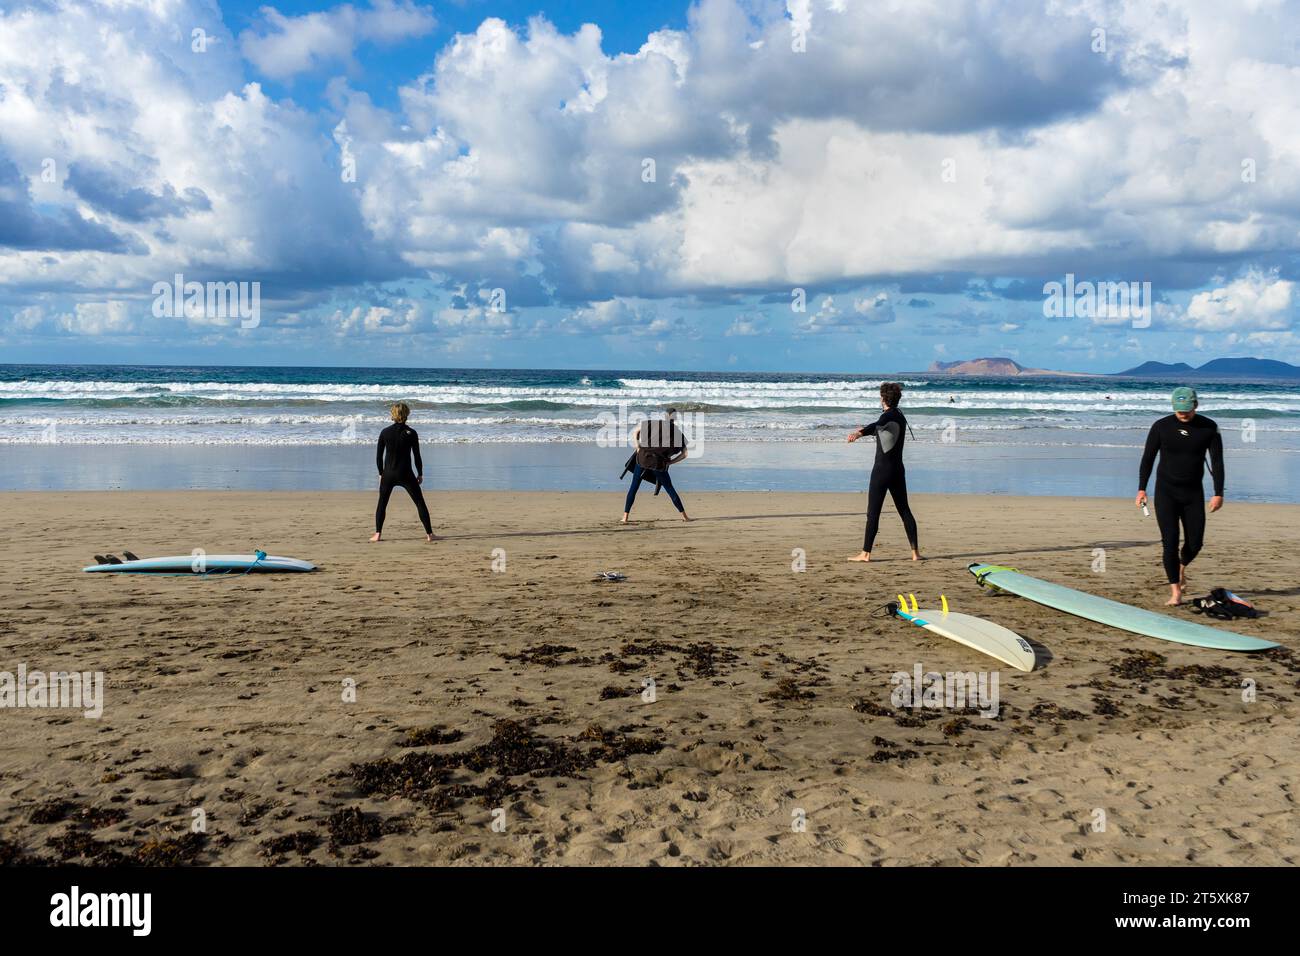 Spain, Lanzarote, Caleta de Famara: surfers train on Famara beach before surfing Stock Photo